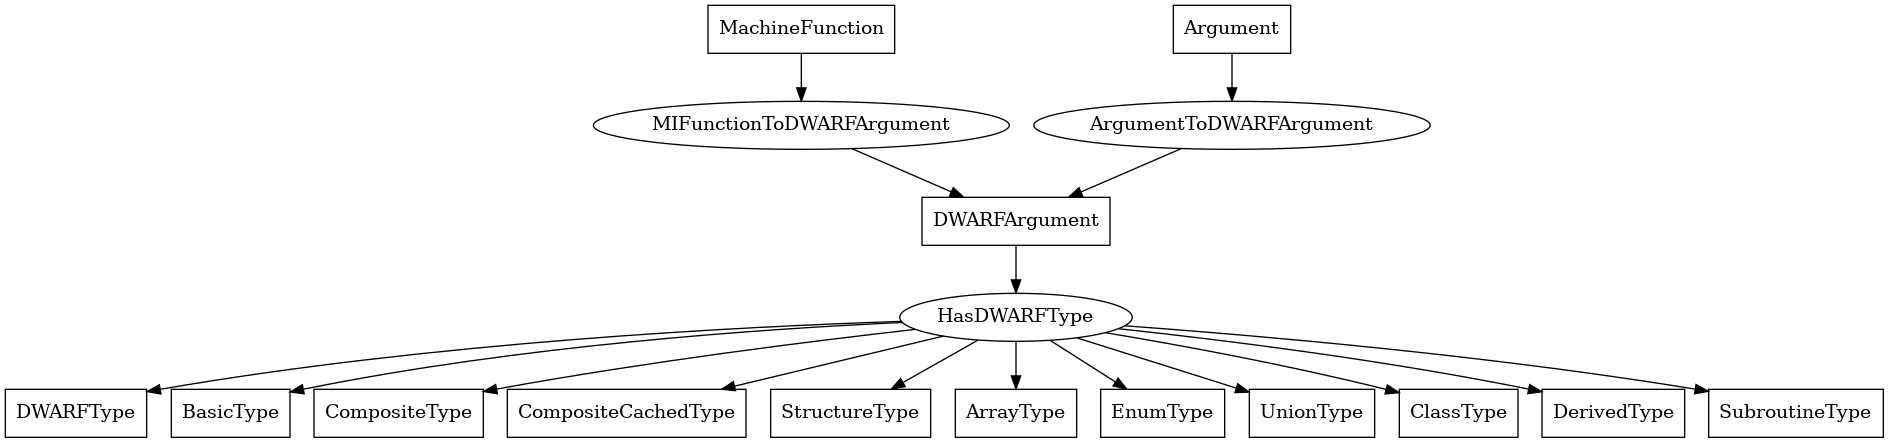 Entity-relationship diagram for DWARFArgument nodes